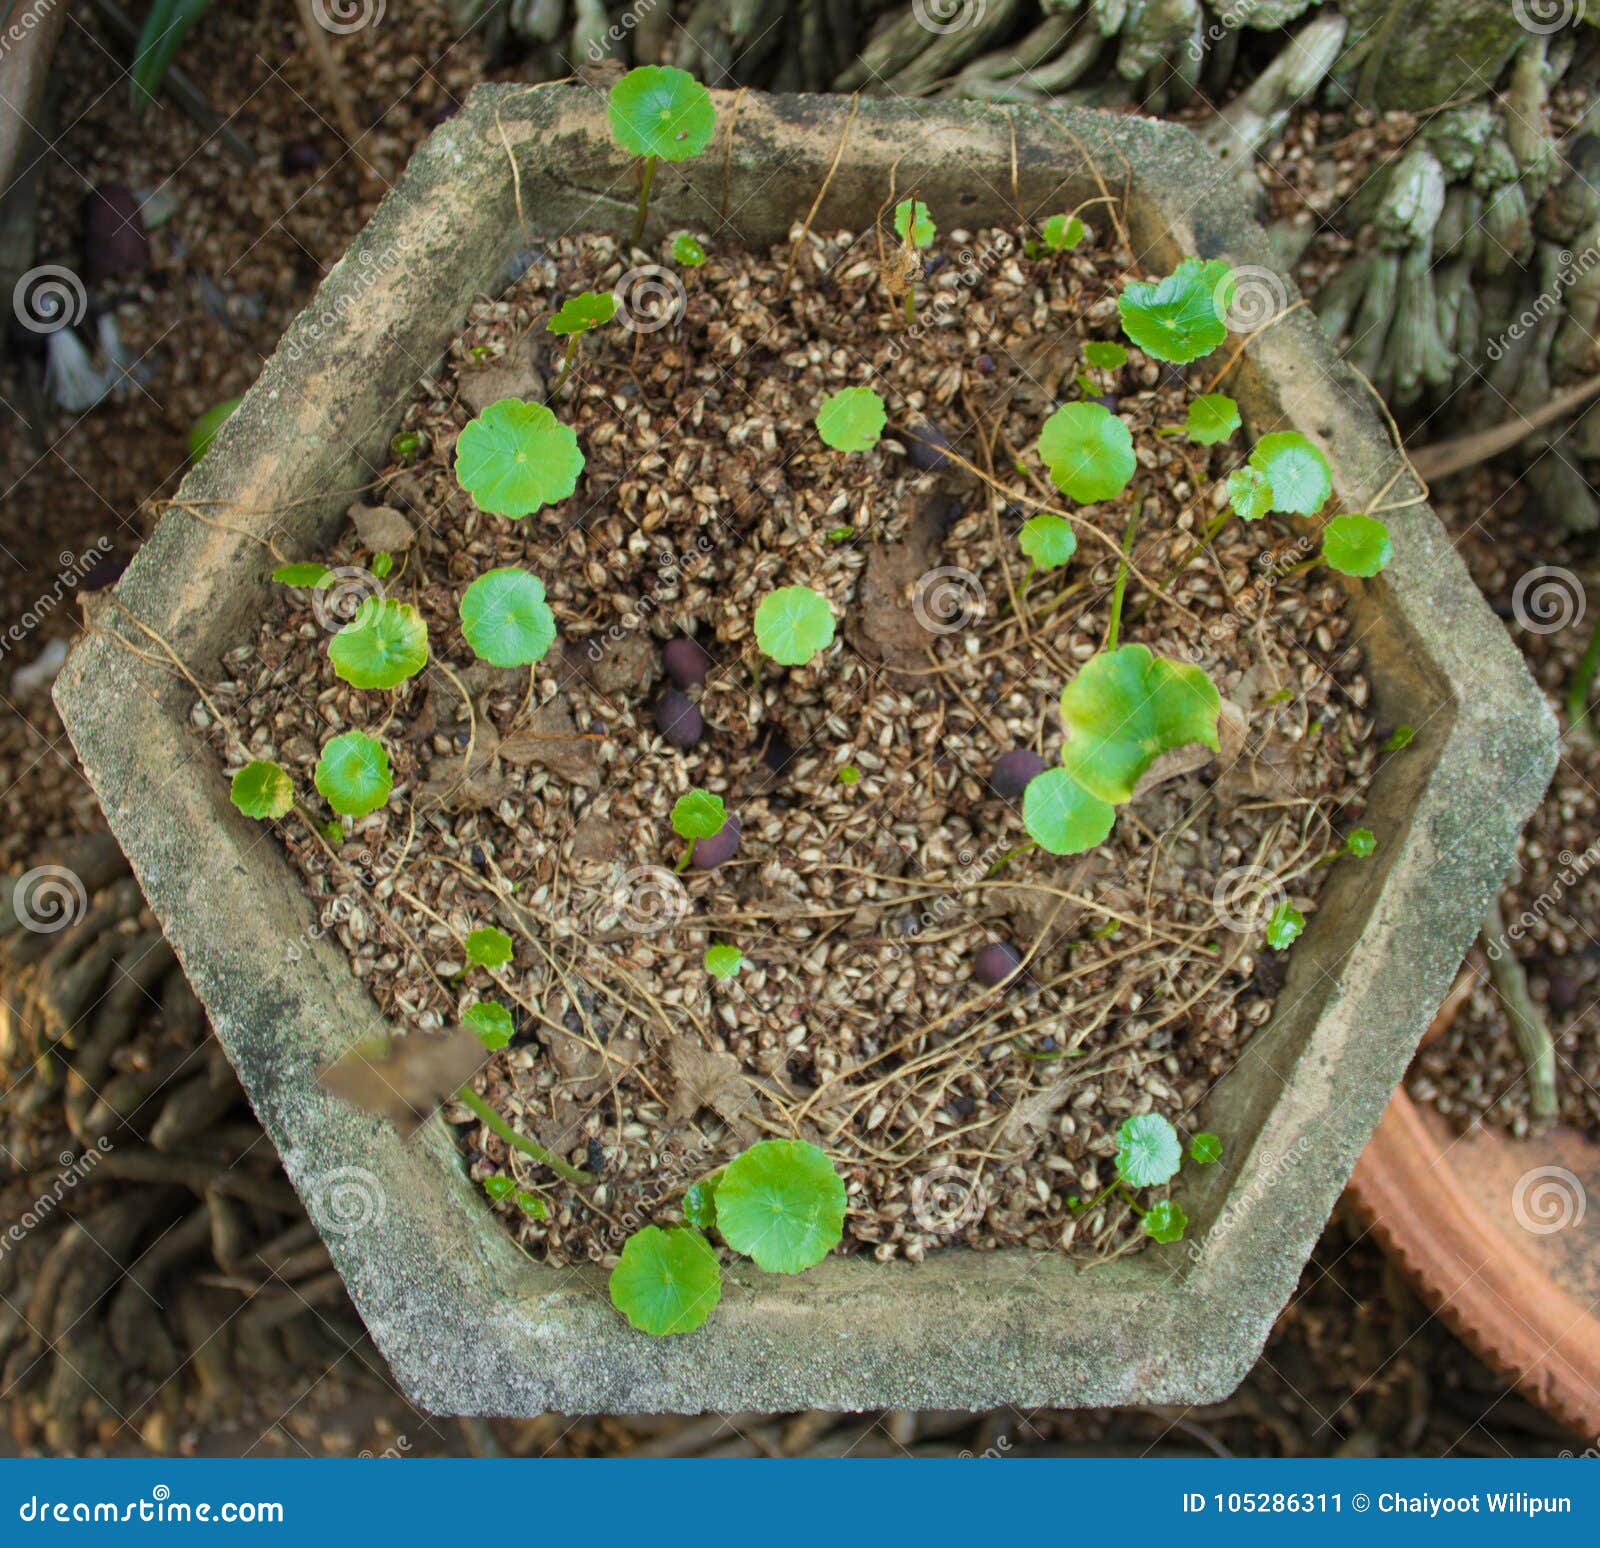 HATCHMATIC 200pcs Bonsai Home Garden Gotu kola Seeds High Germination Rate 